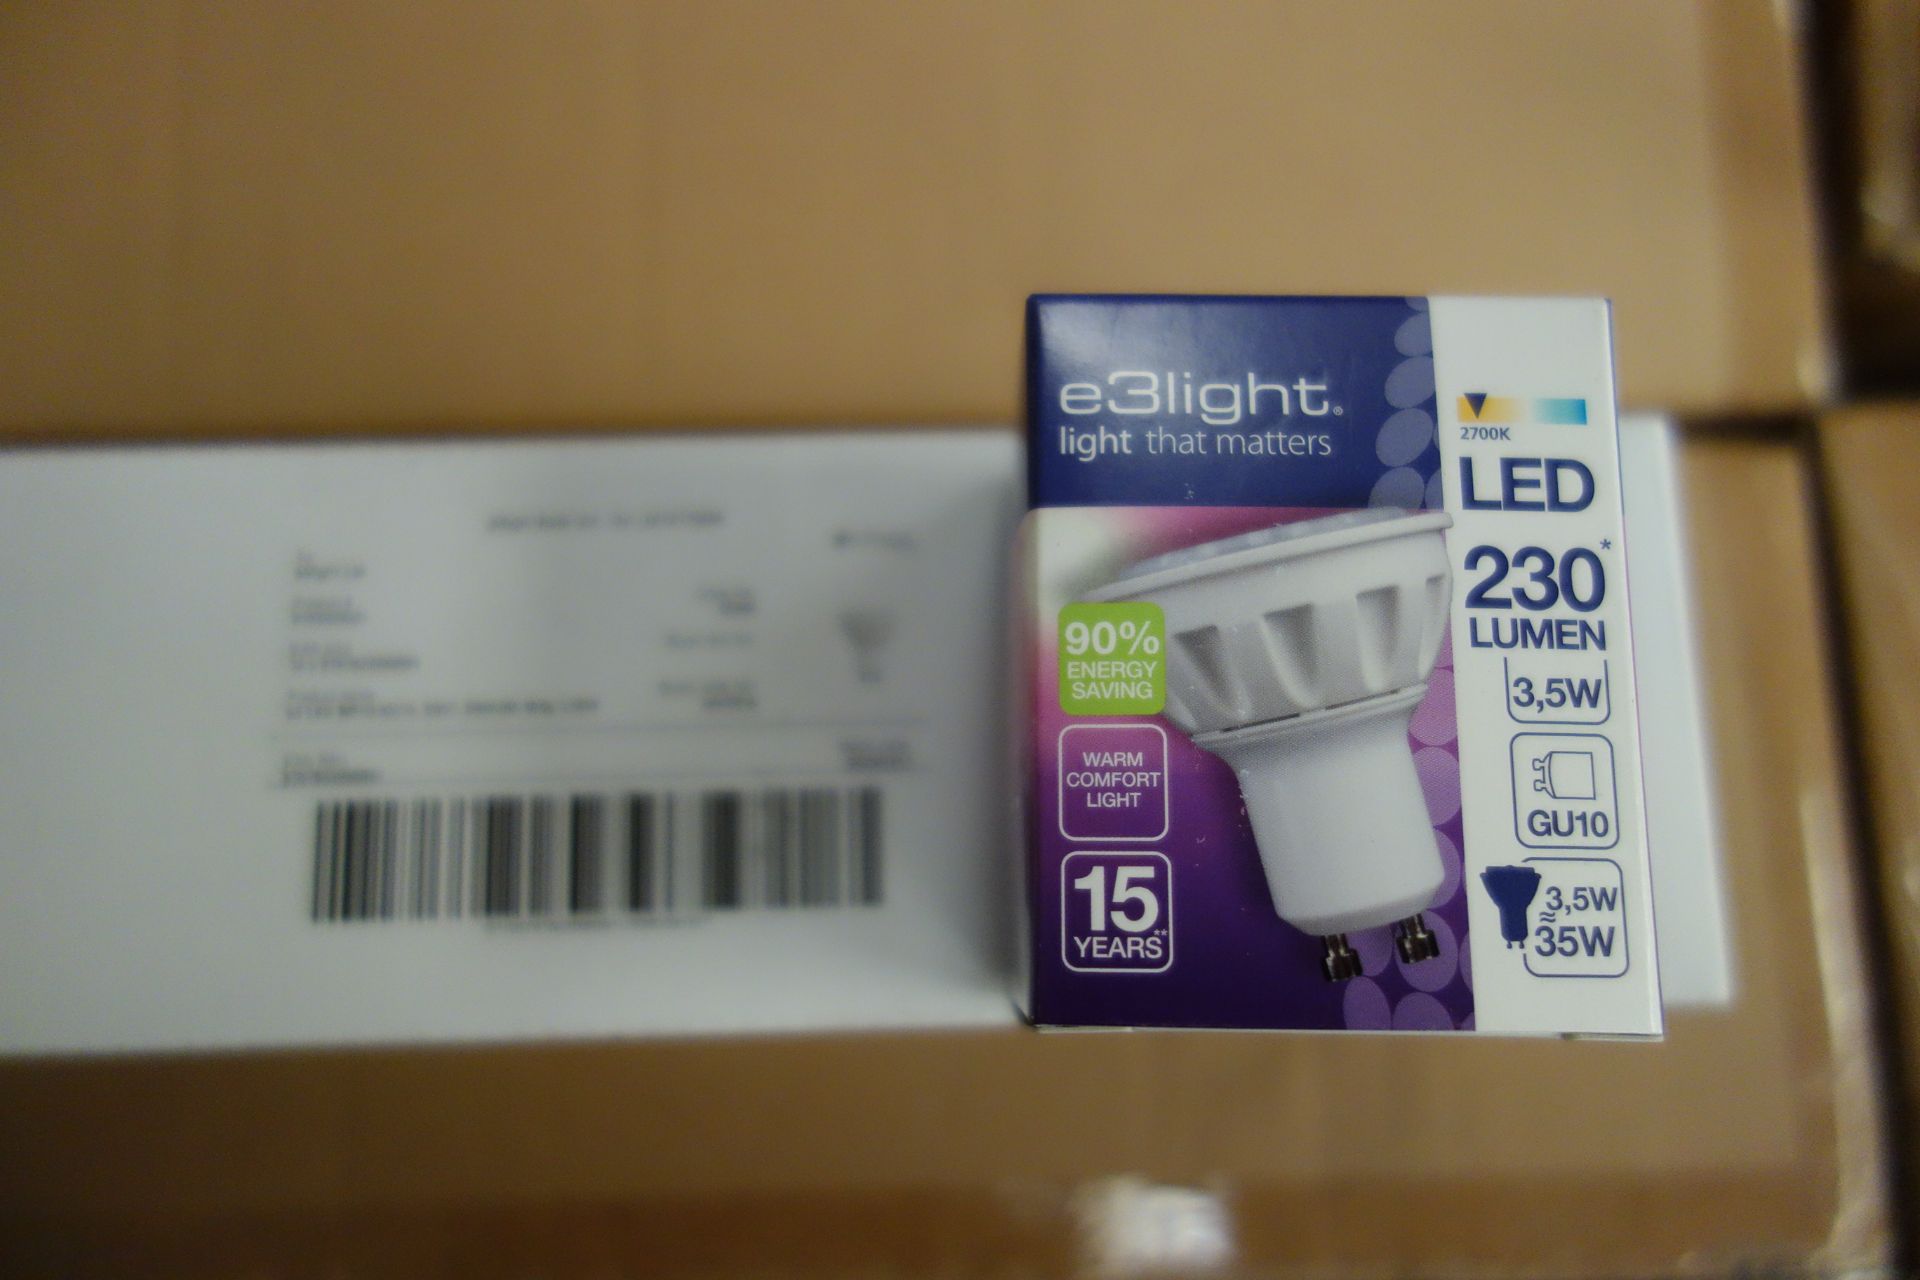 100 X E3Light 0103253521 GU10 LED 230 Lumen 3.5 W = 35W Warm Comfort Light